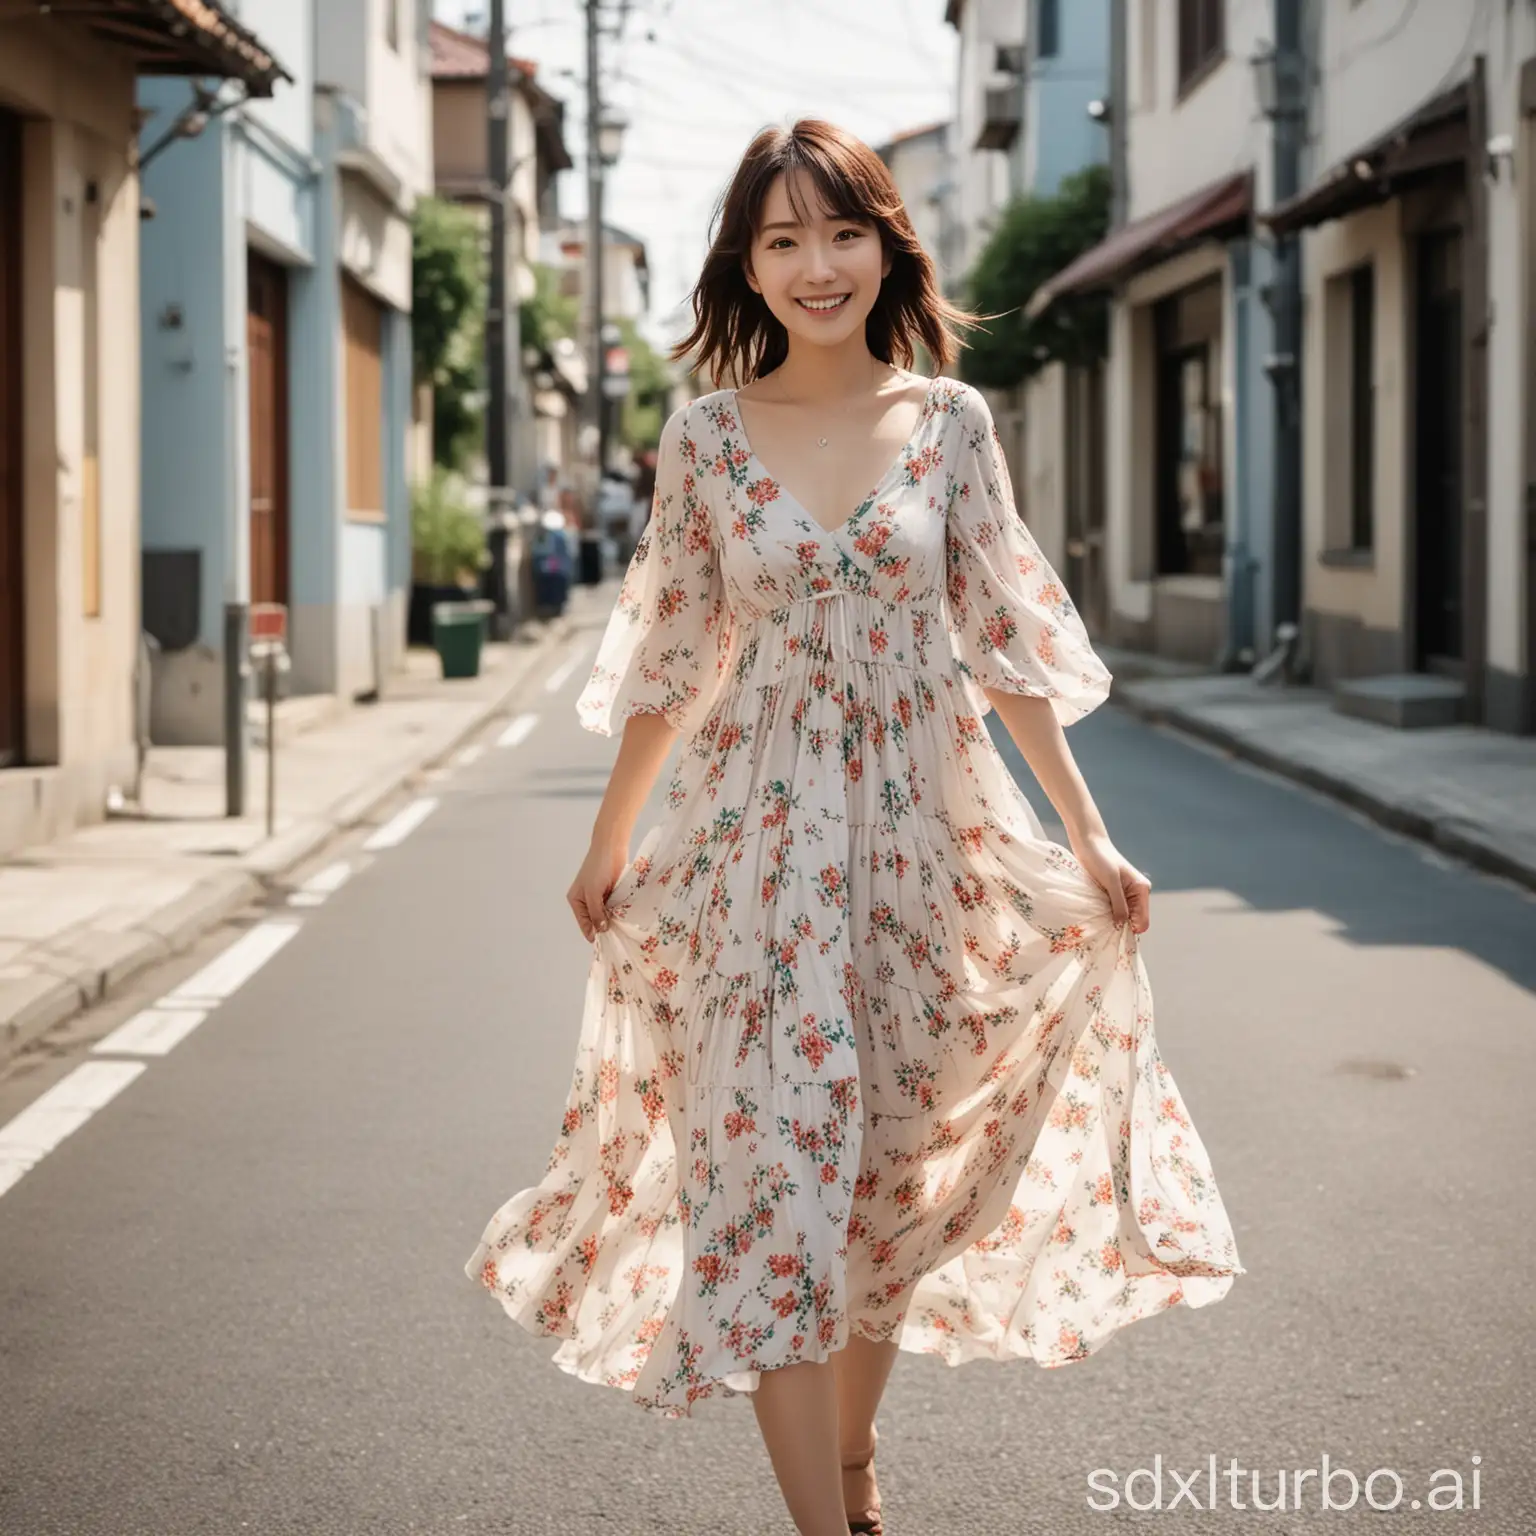 Aragaki-Yui-Strolling-in-a-Flowing-Summer-Dress-Realistic-Photo